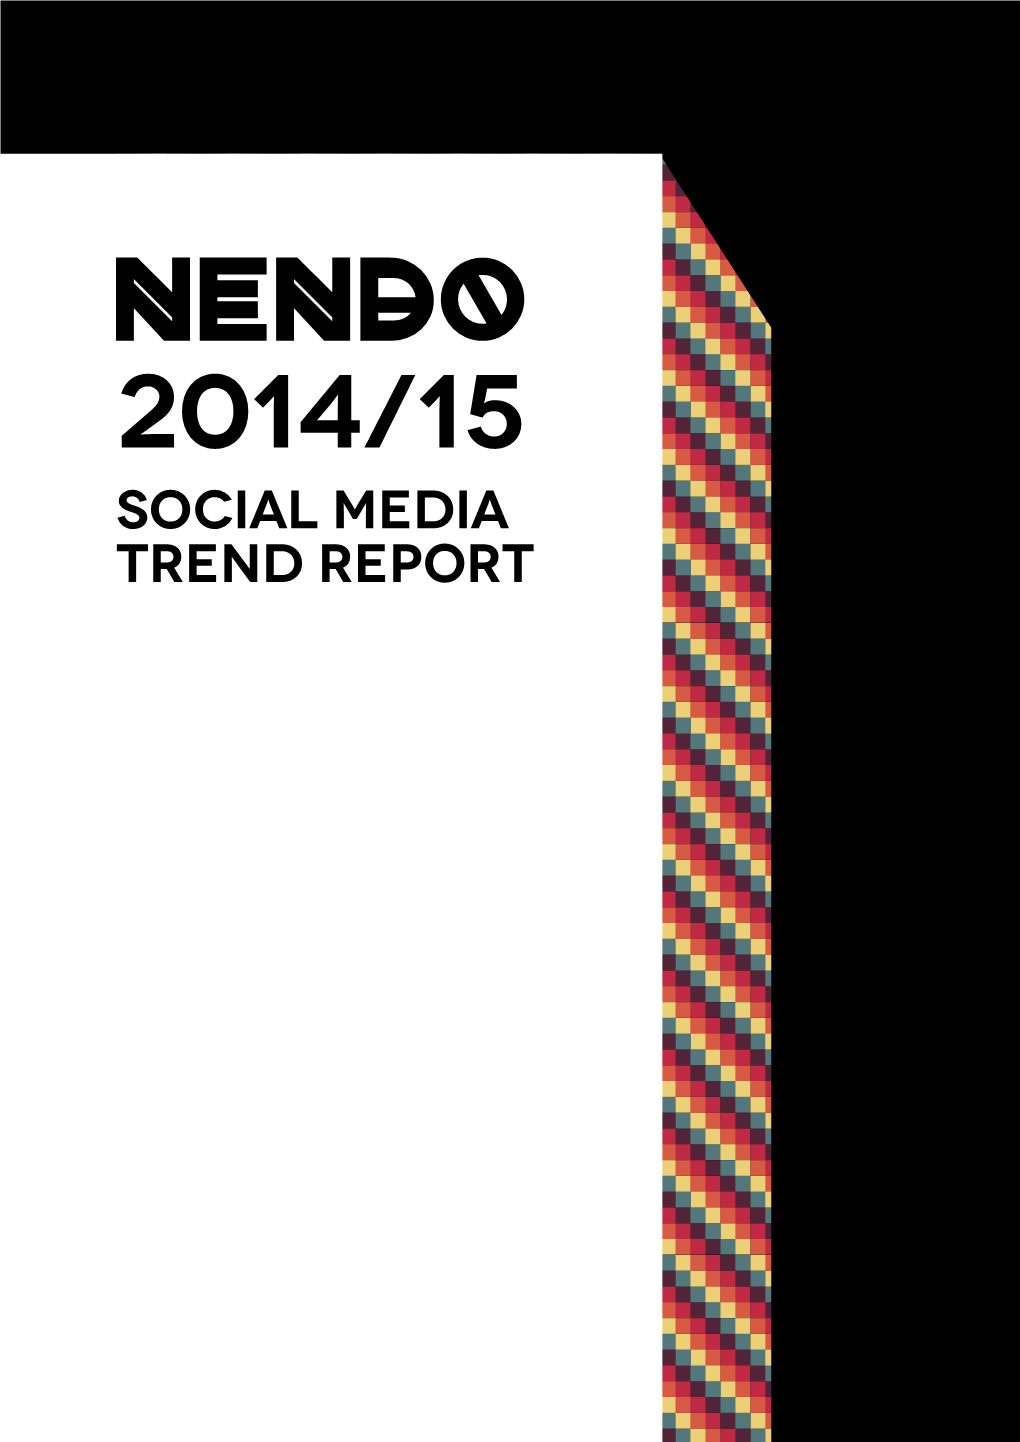 Nendo 2014/15 Social Media Trend Report